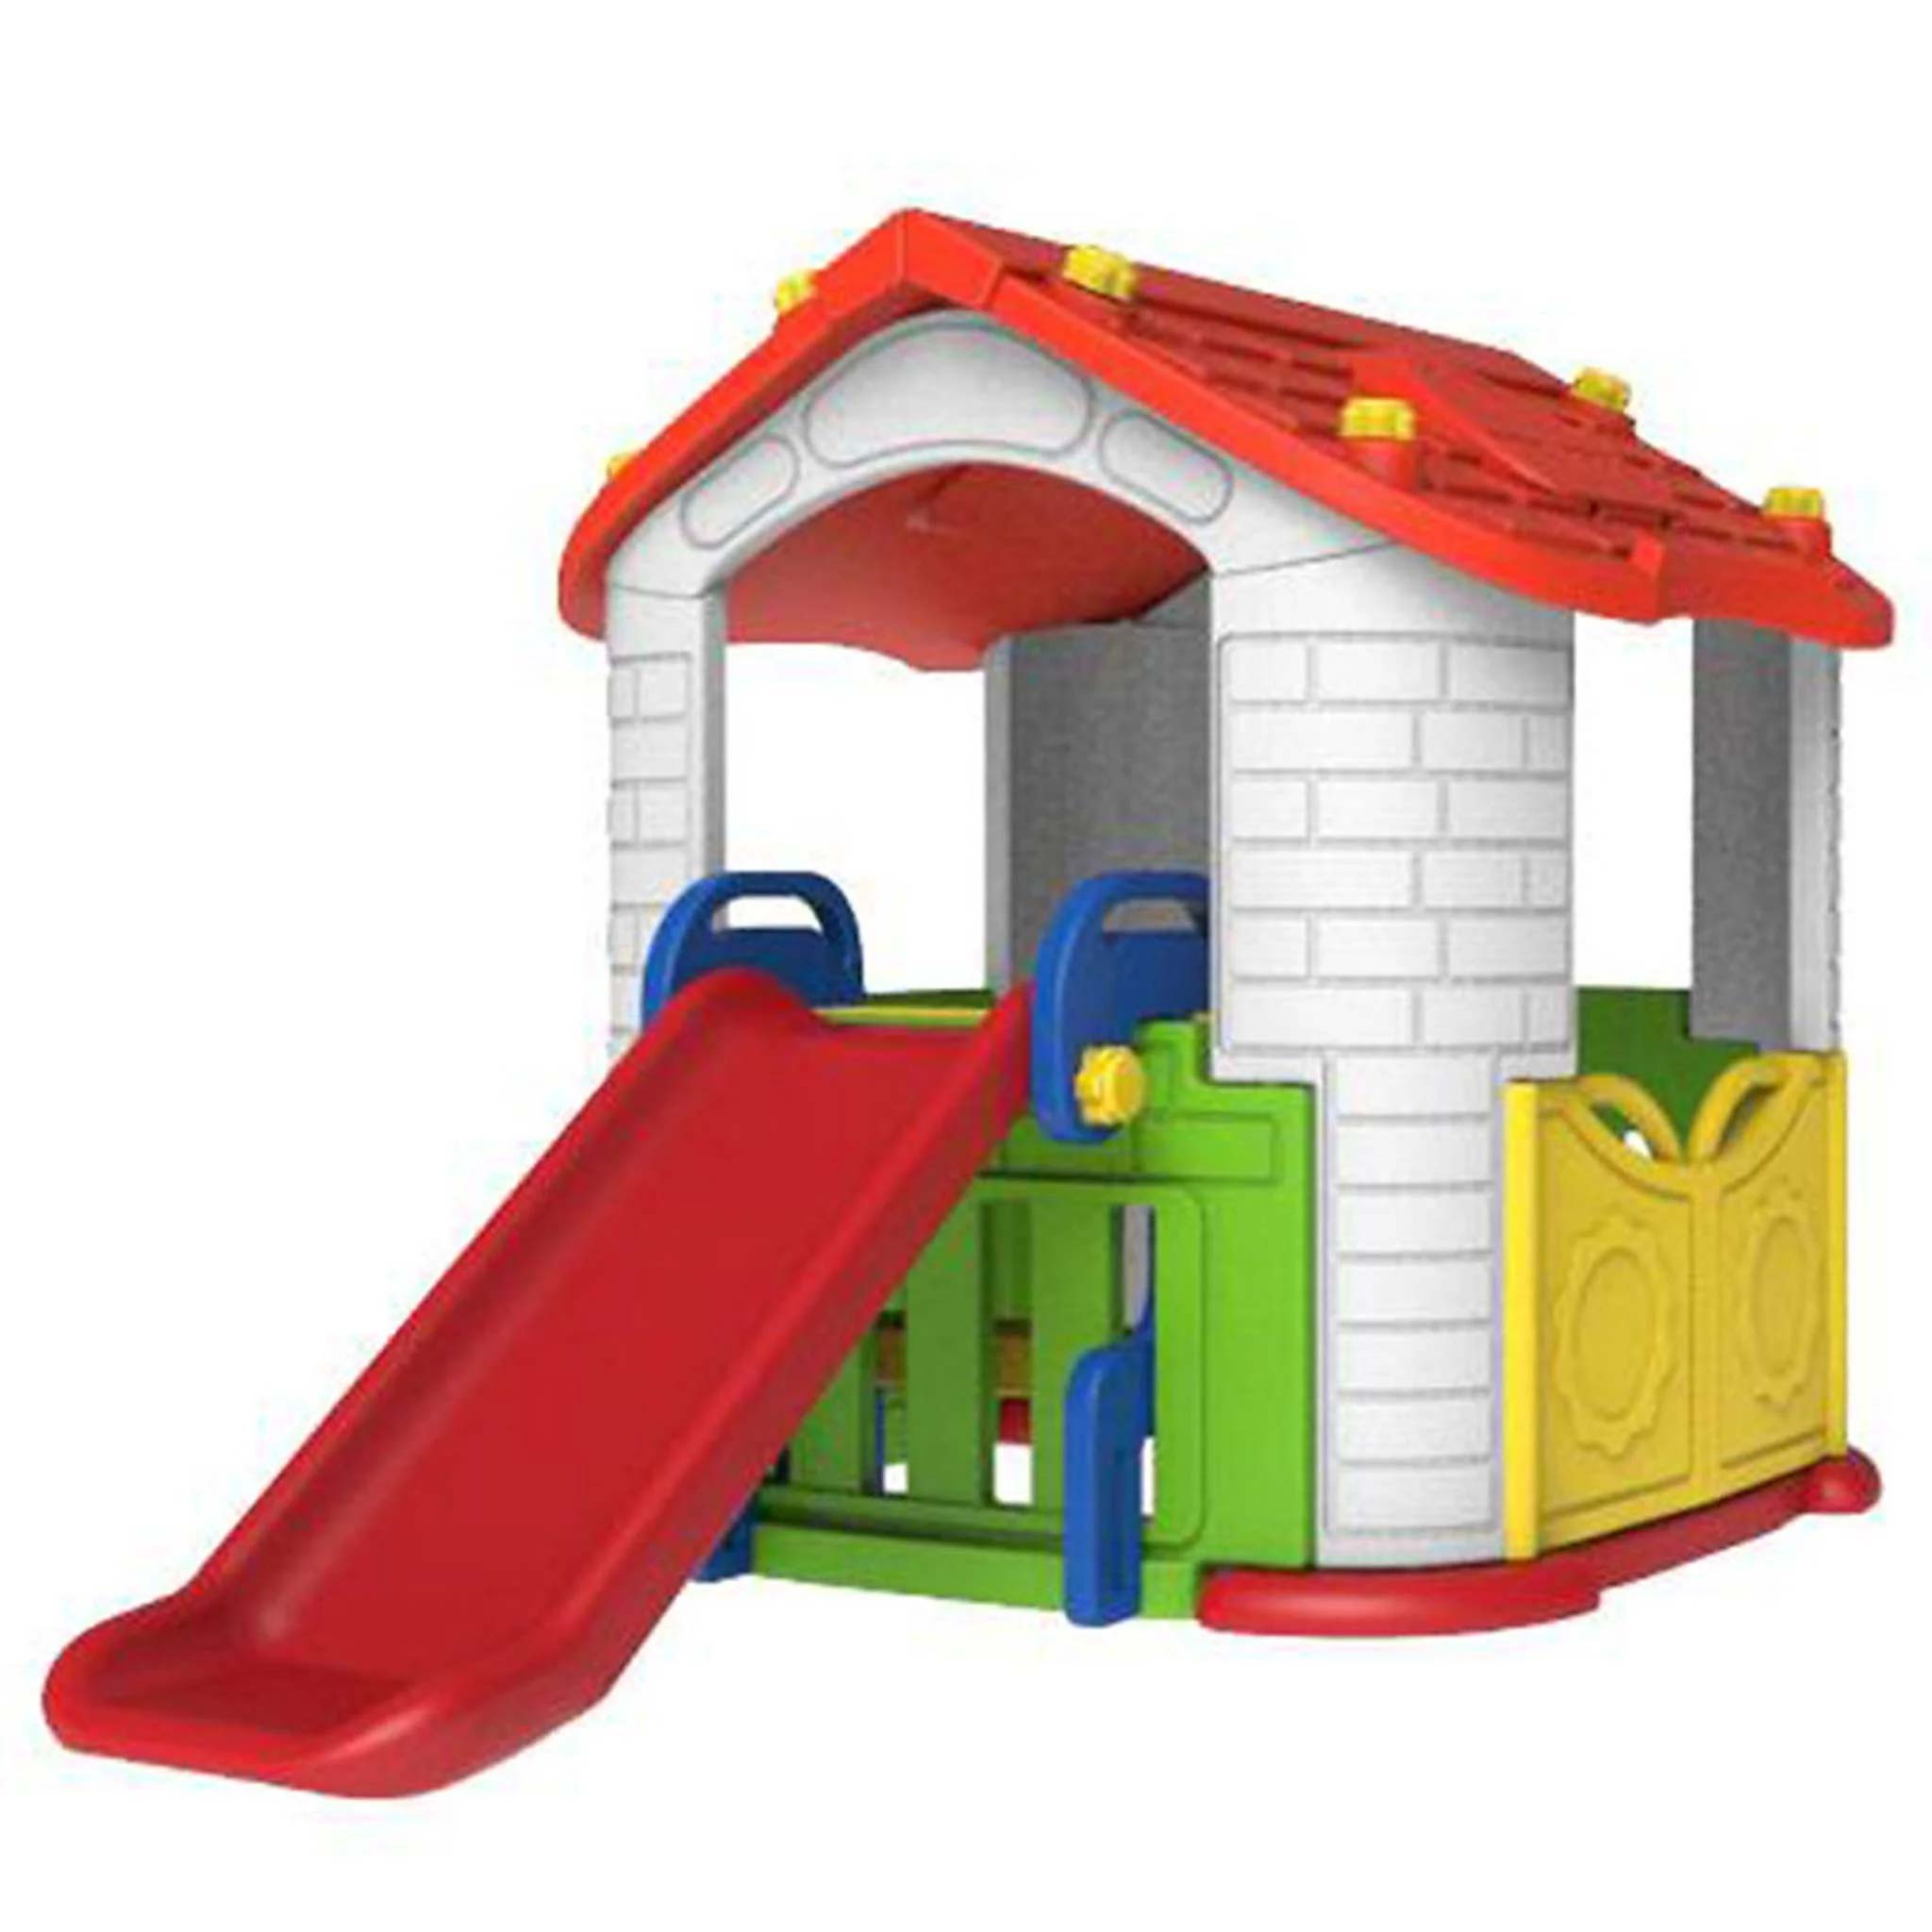 Slide & Play House